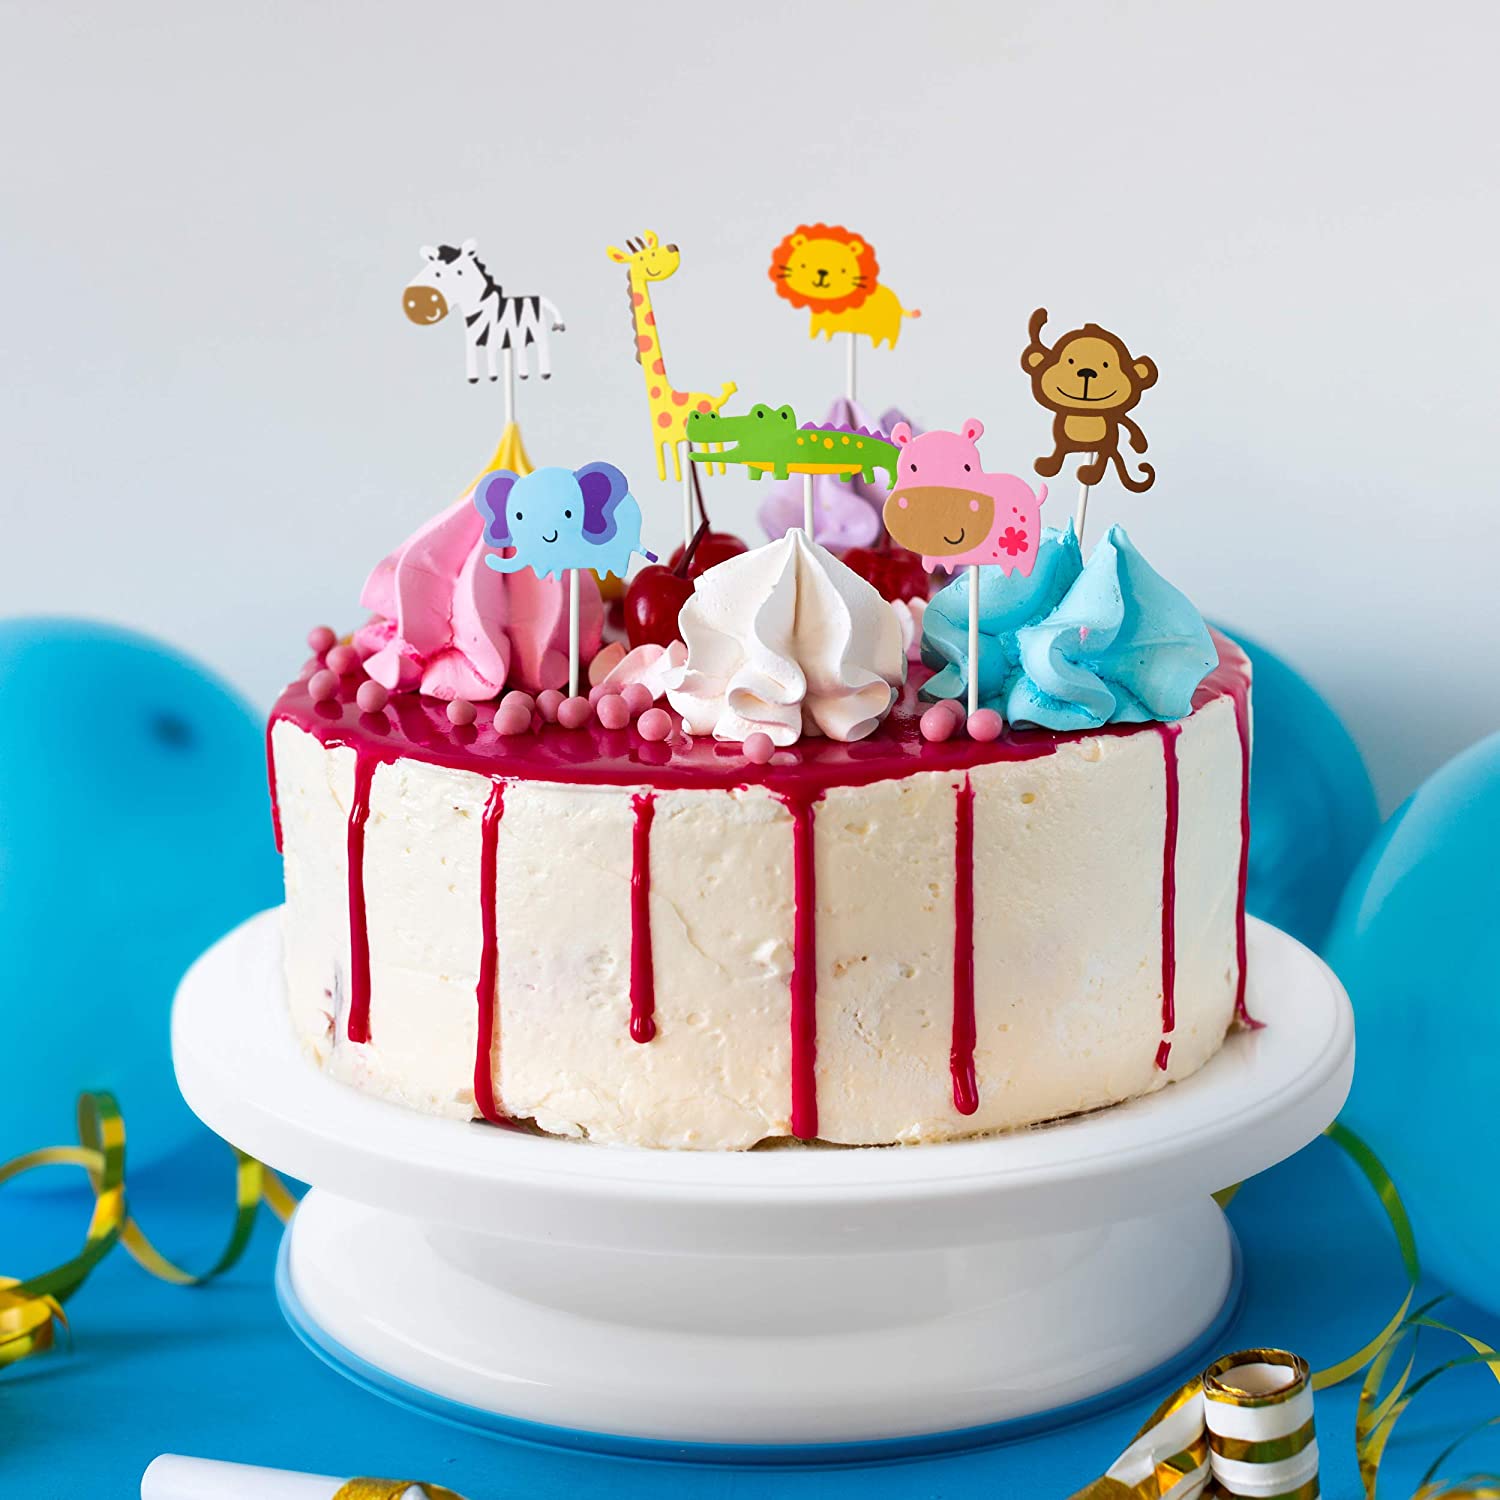 RiseBrite Kids Cake Decoration Set Cake Toppers